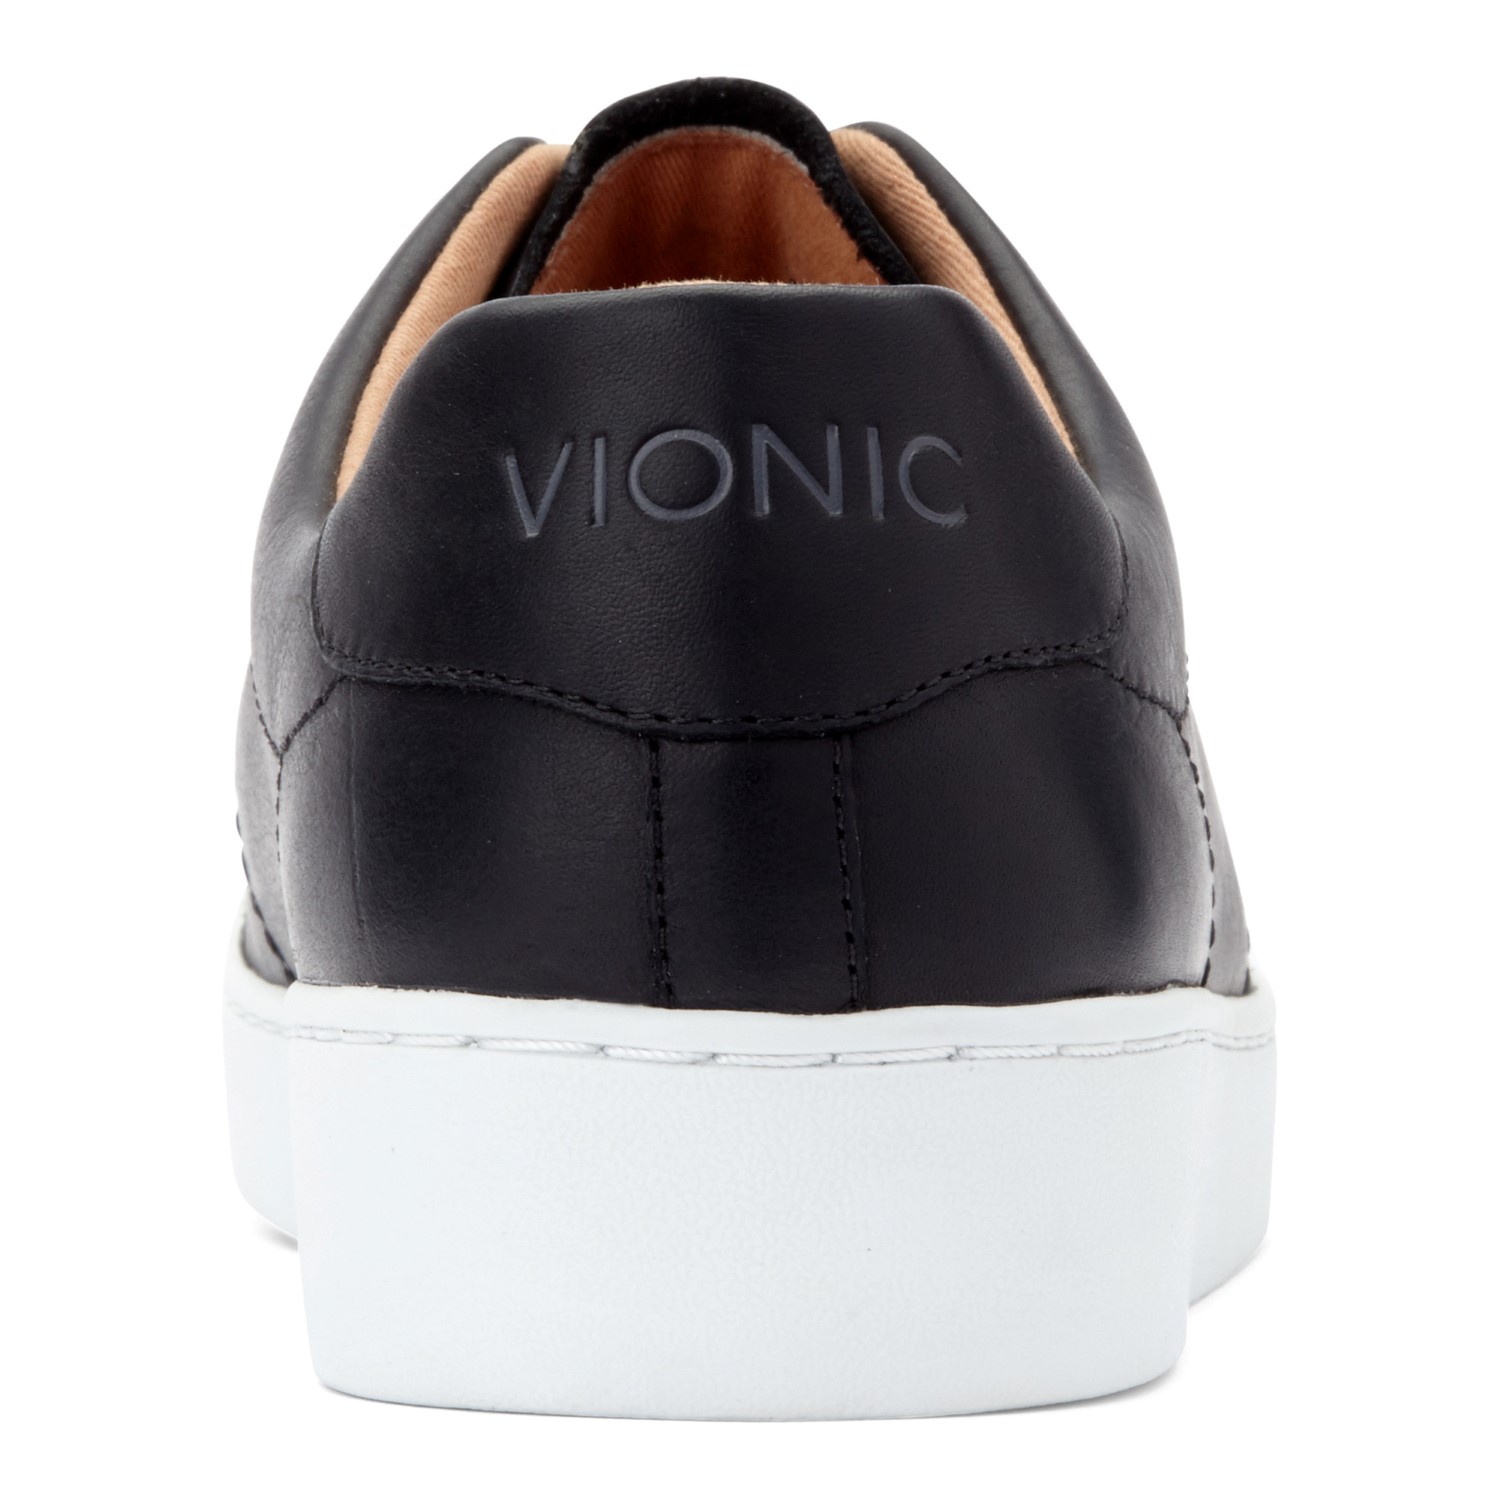 Vionic Womens Splendid Ellis Fashion Sneaker